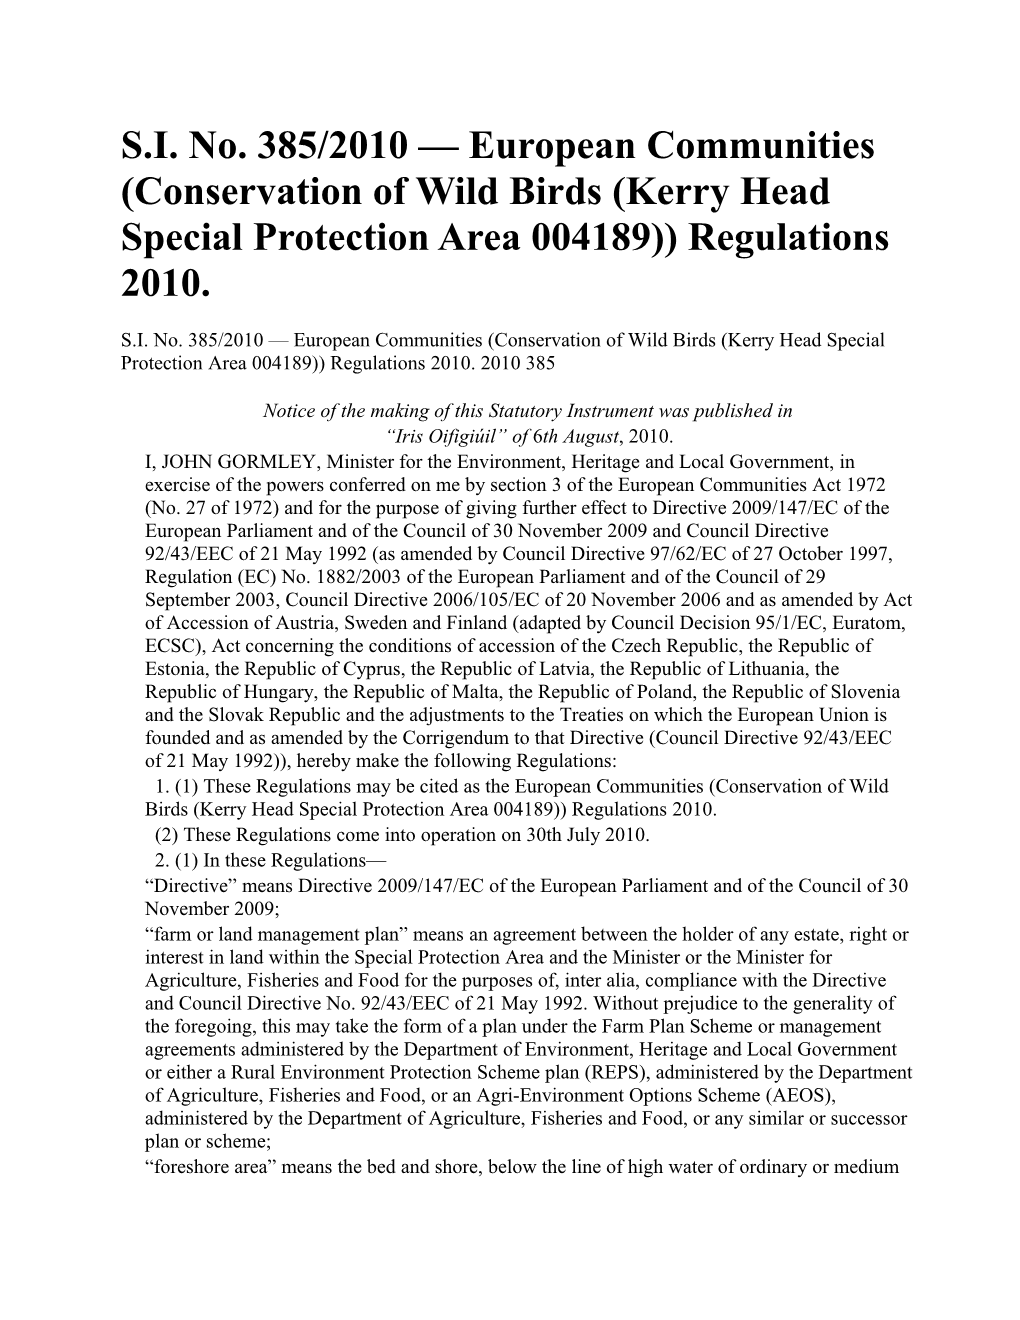 S.I. No. 385/2010 European Communities (Conservation of Wild Birds (Kerry Head Special